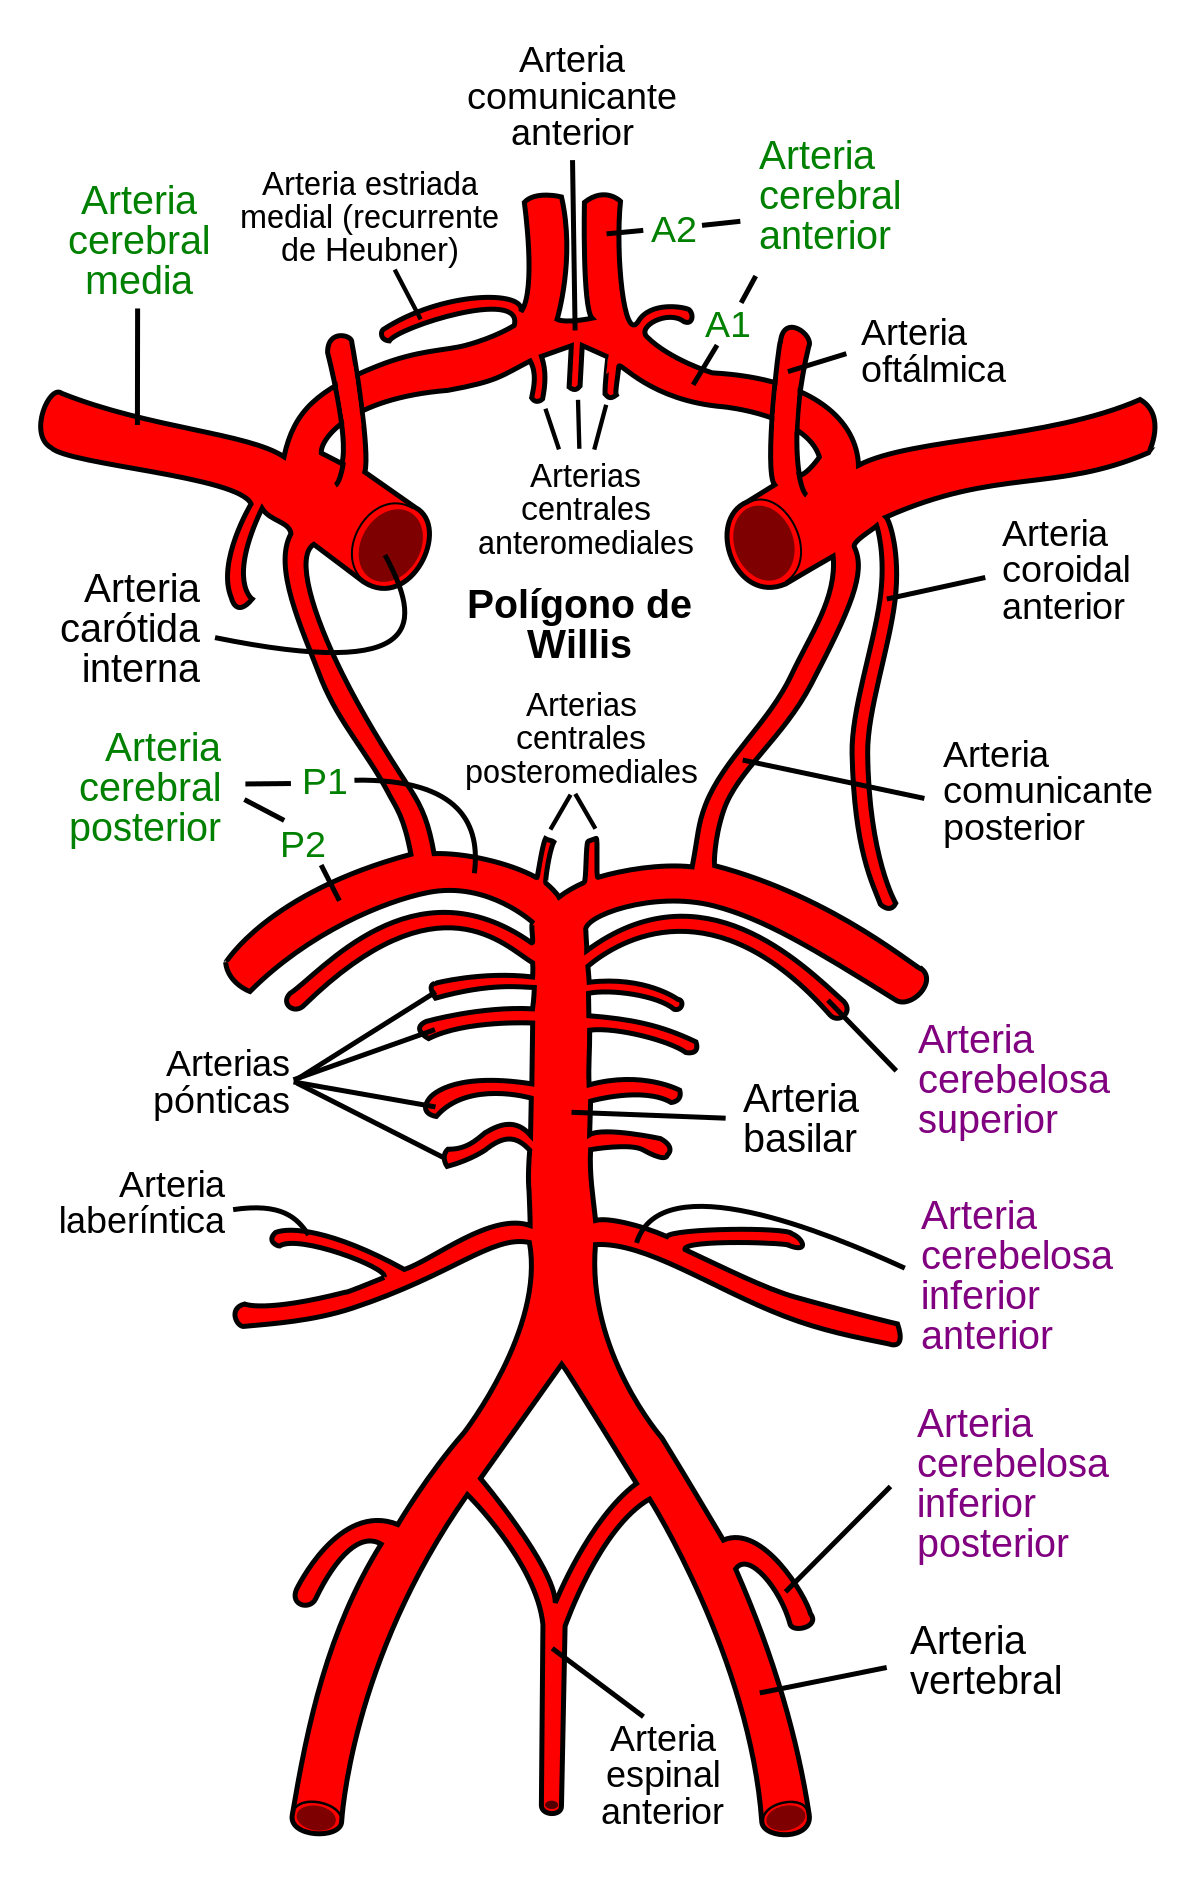 Arteria media - Wikipedia, la enciclopedia libre